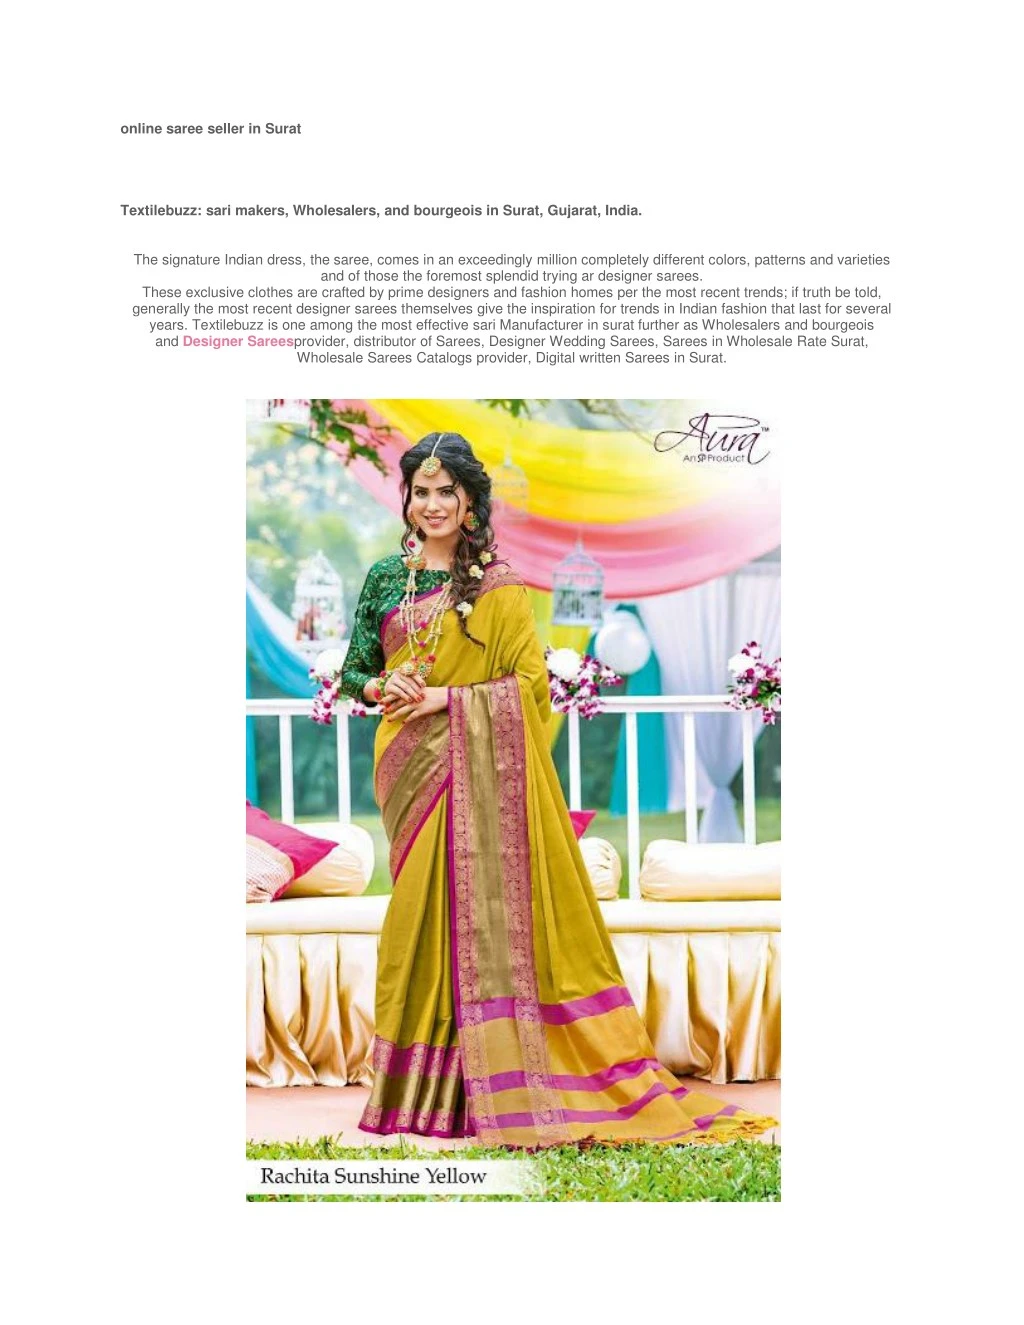 online saree seller in surat textilebuzz sari